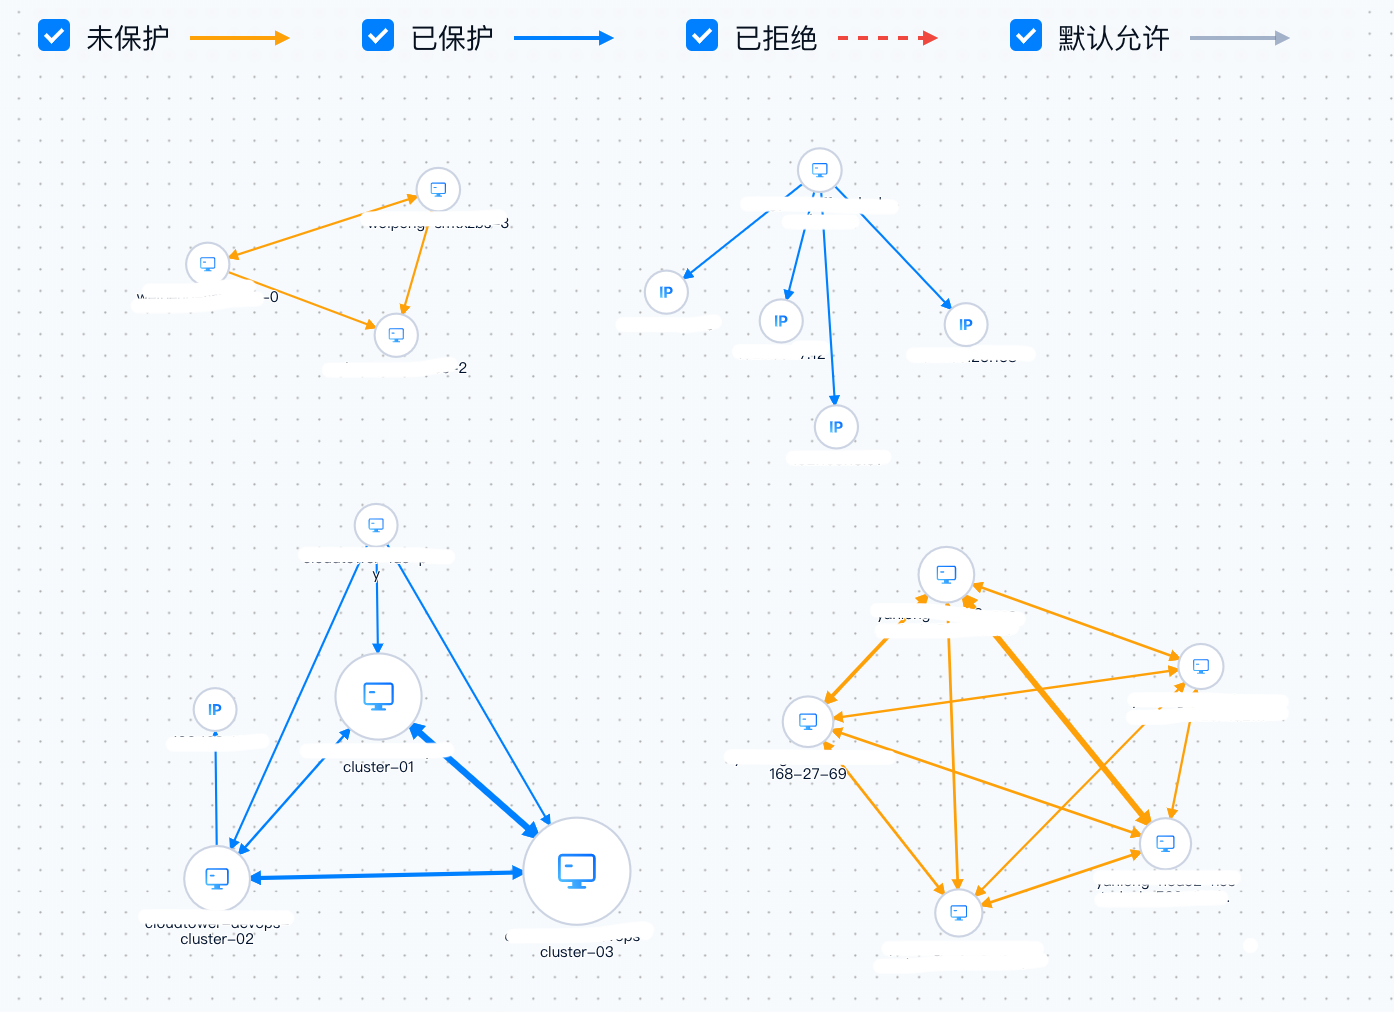 08_smartx-network-traffic-visualization.png